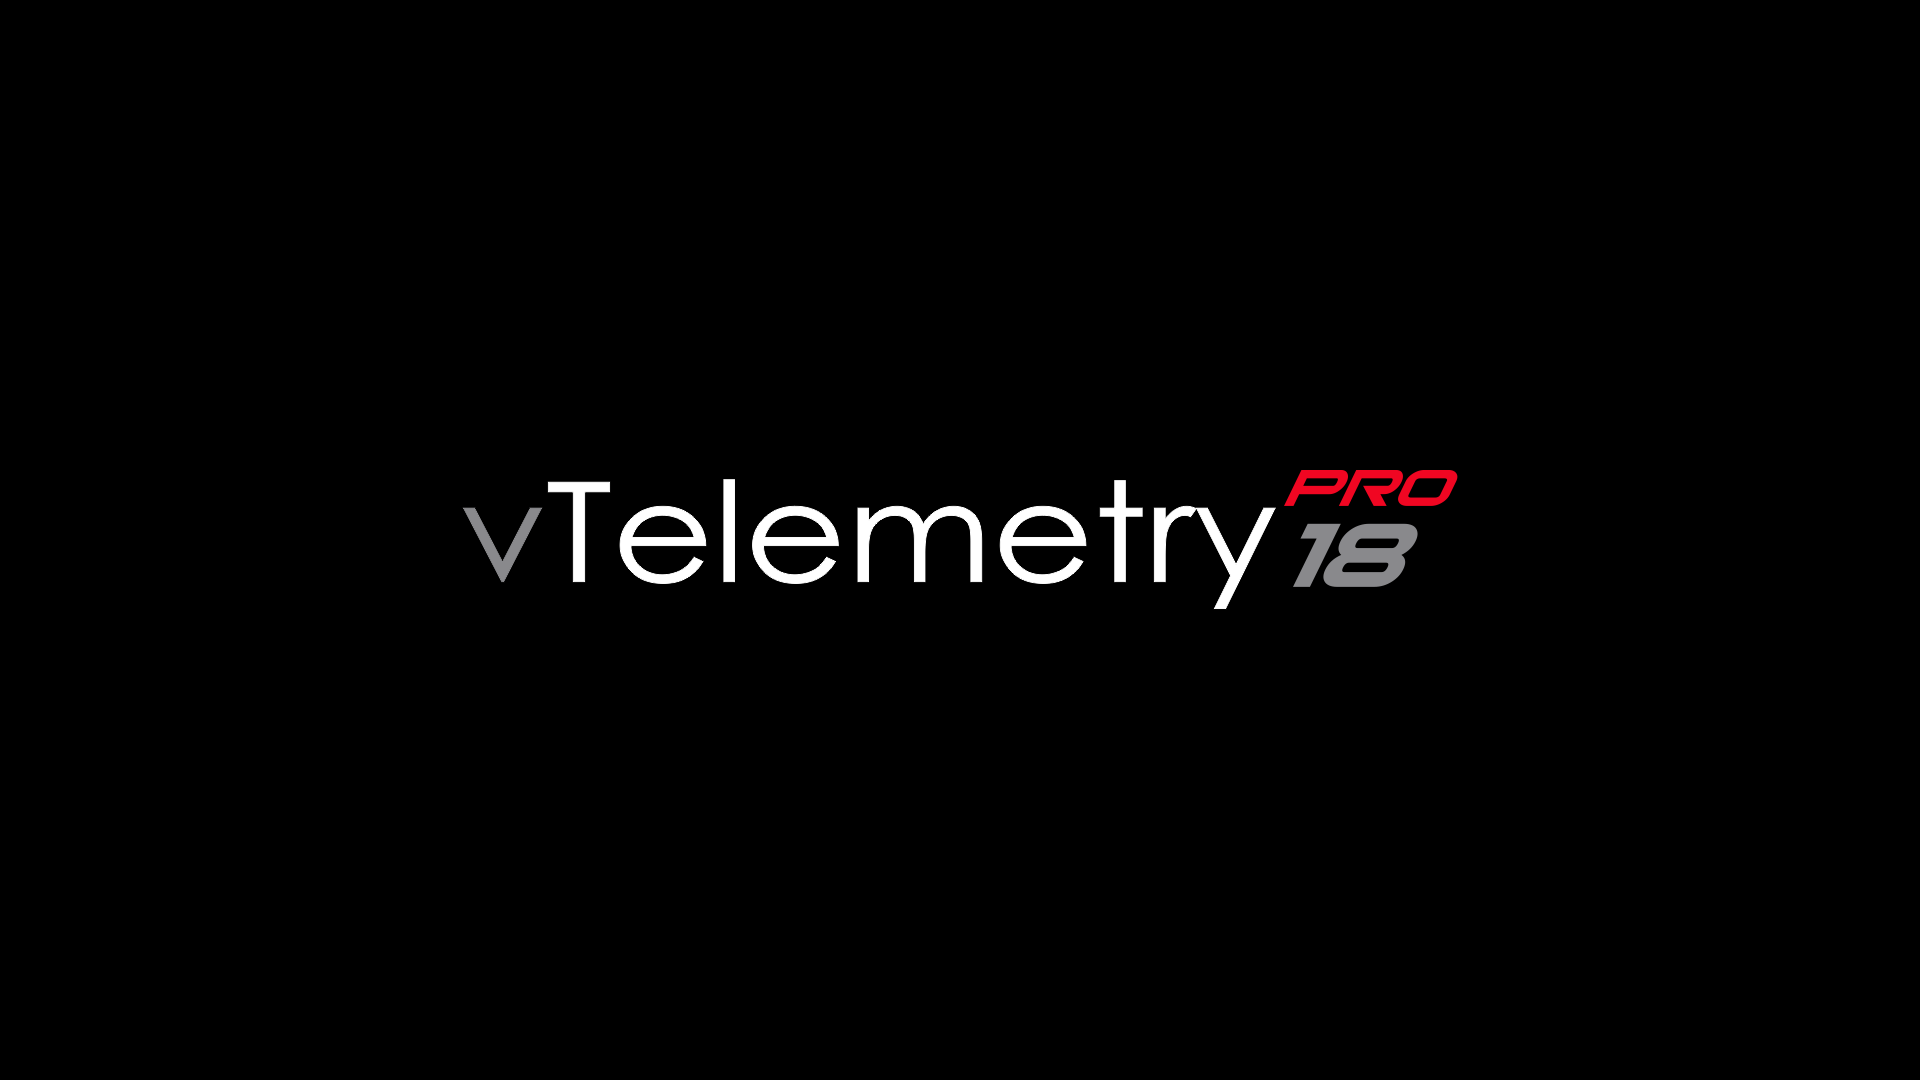 More information about "Recensione DrivingItalia: vTelemetry Pro 2018 by Renovatio Development"